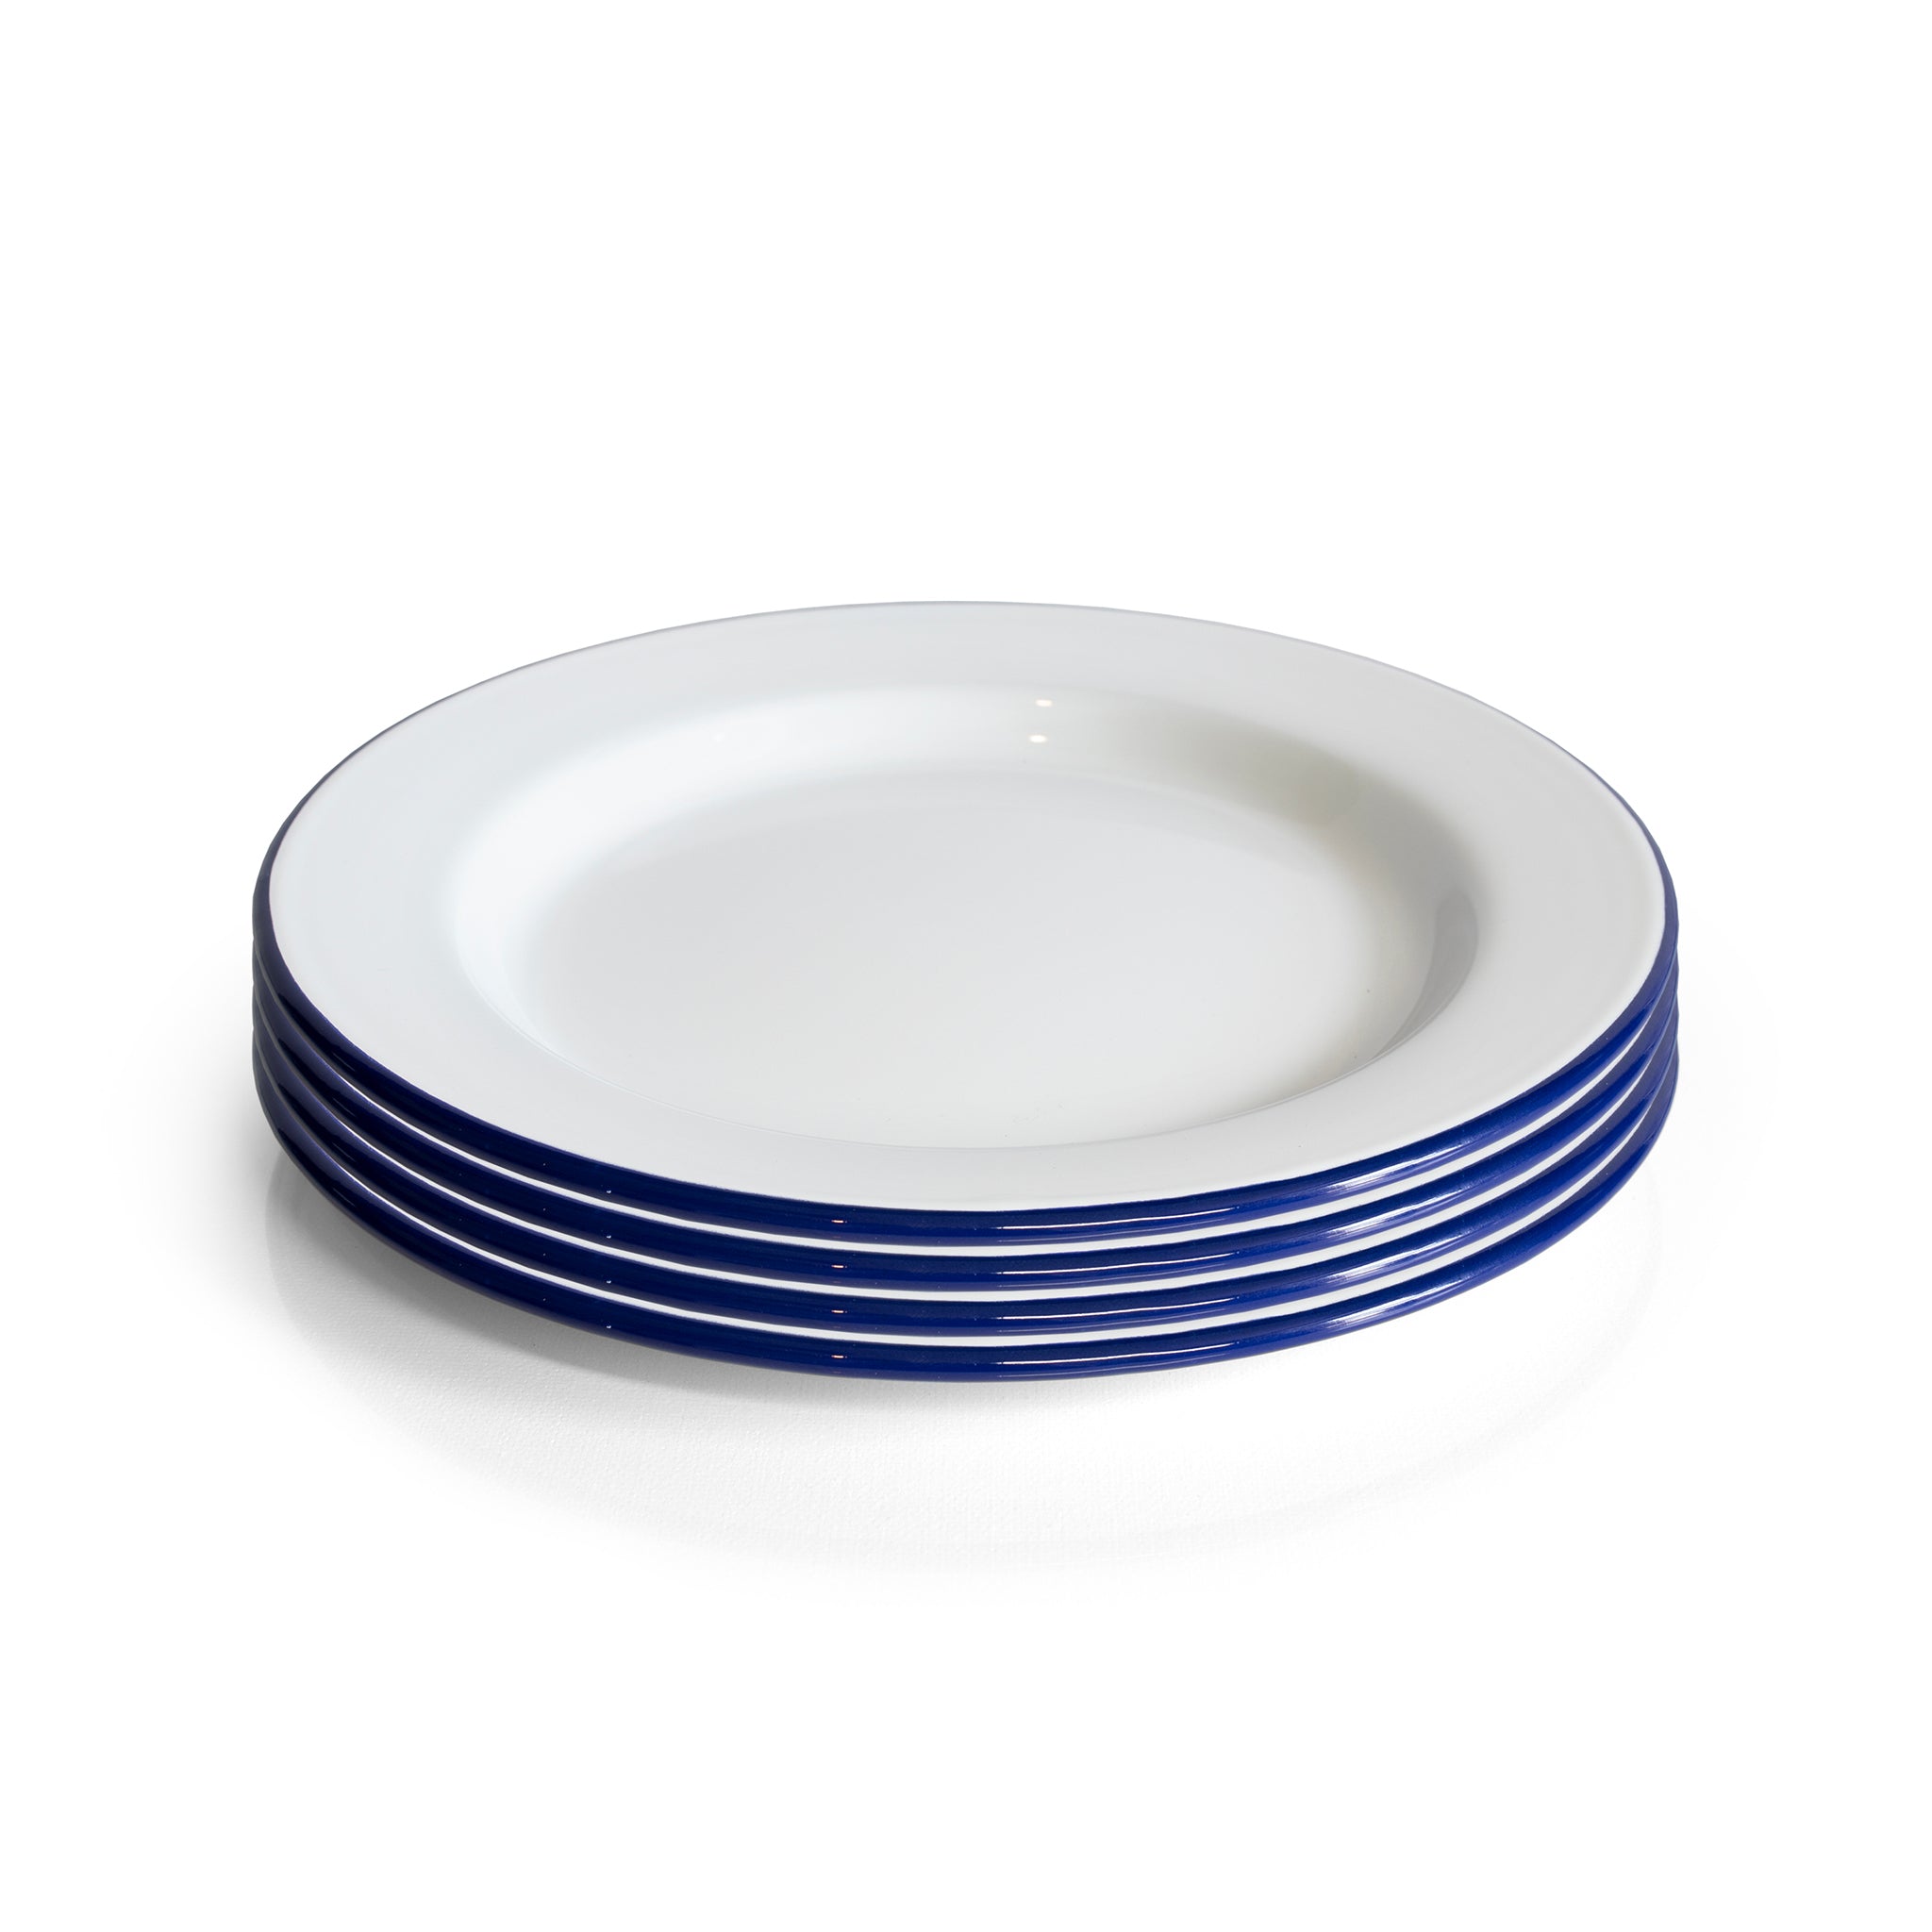 Enamel plate white with blue rim set